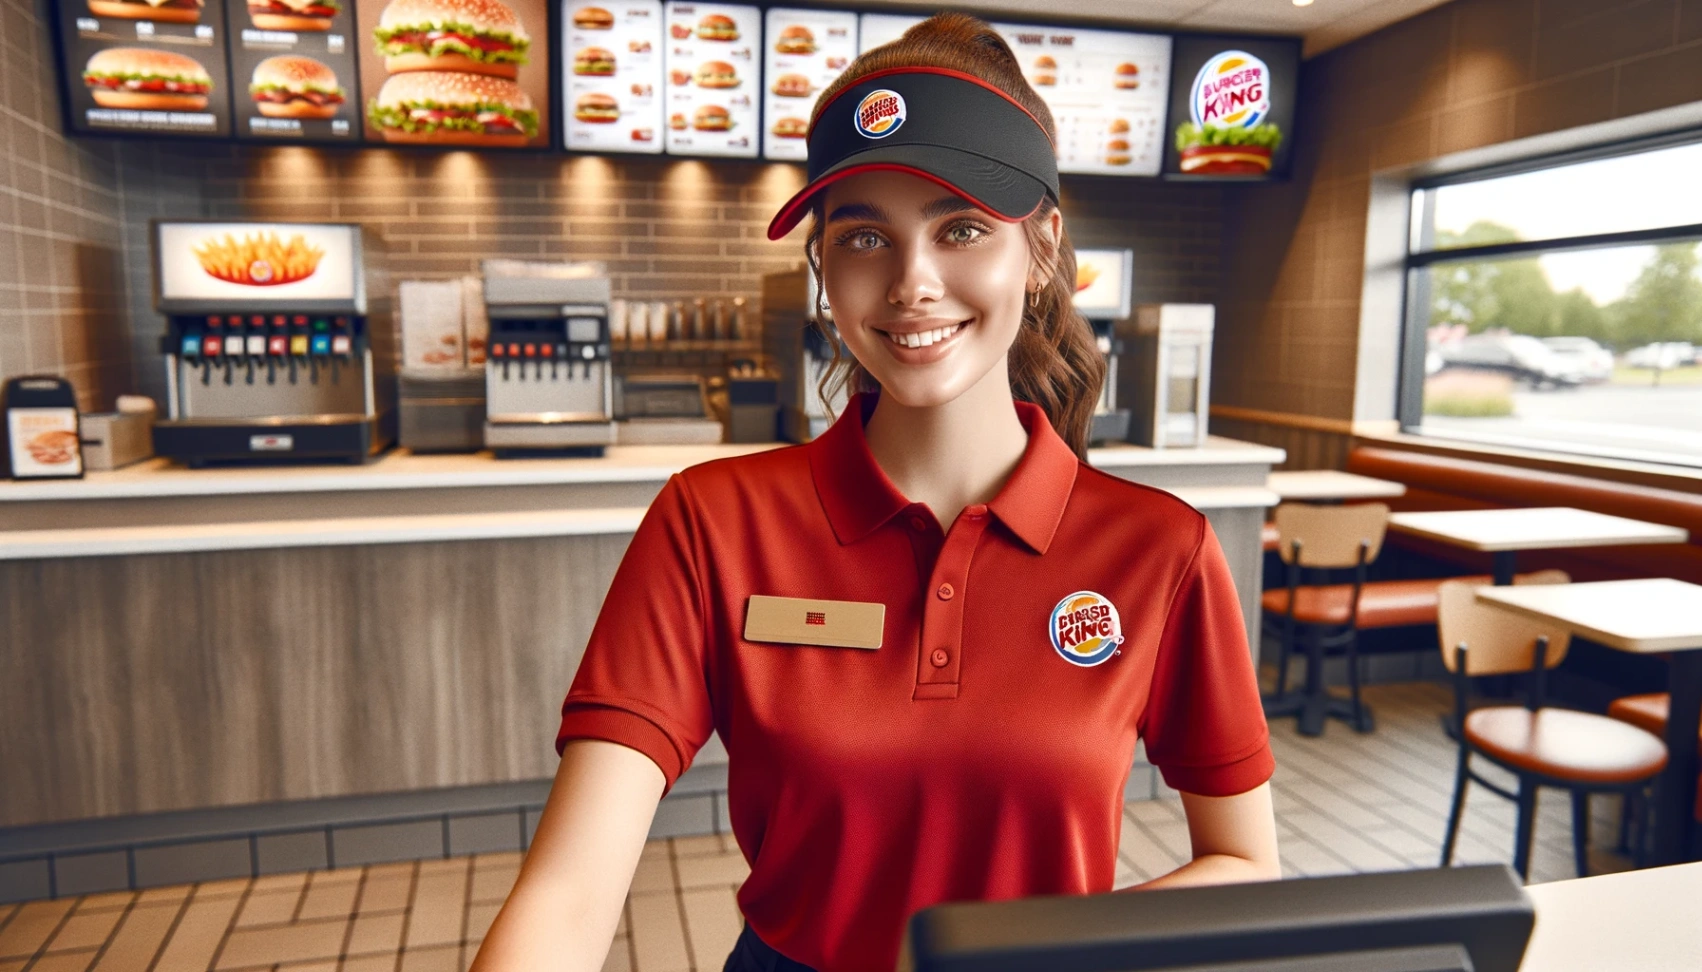 Burger King Jobs: Žádost o práci zjednodušena